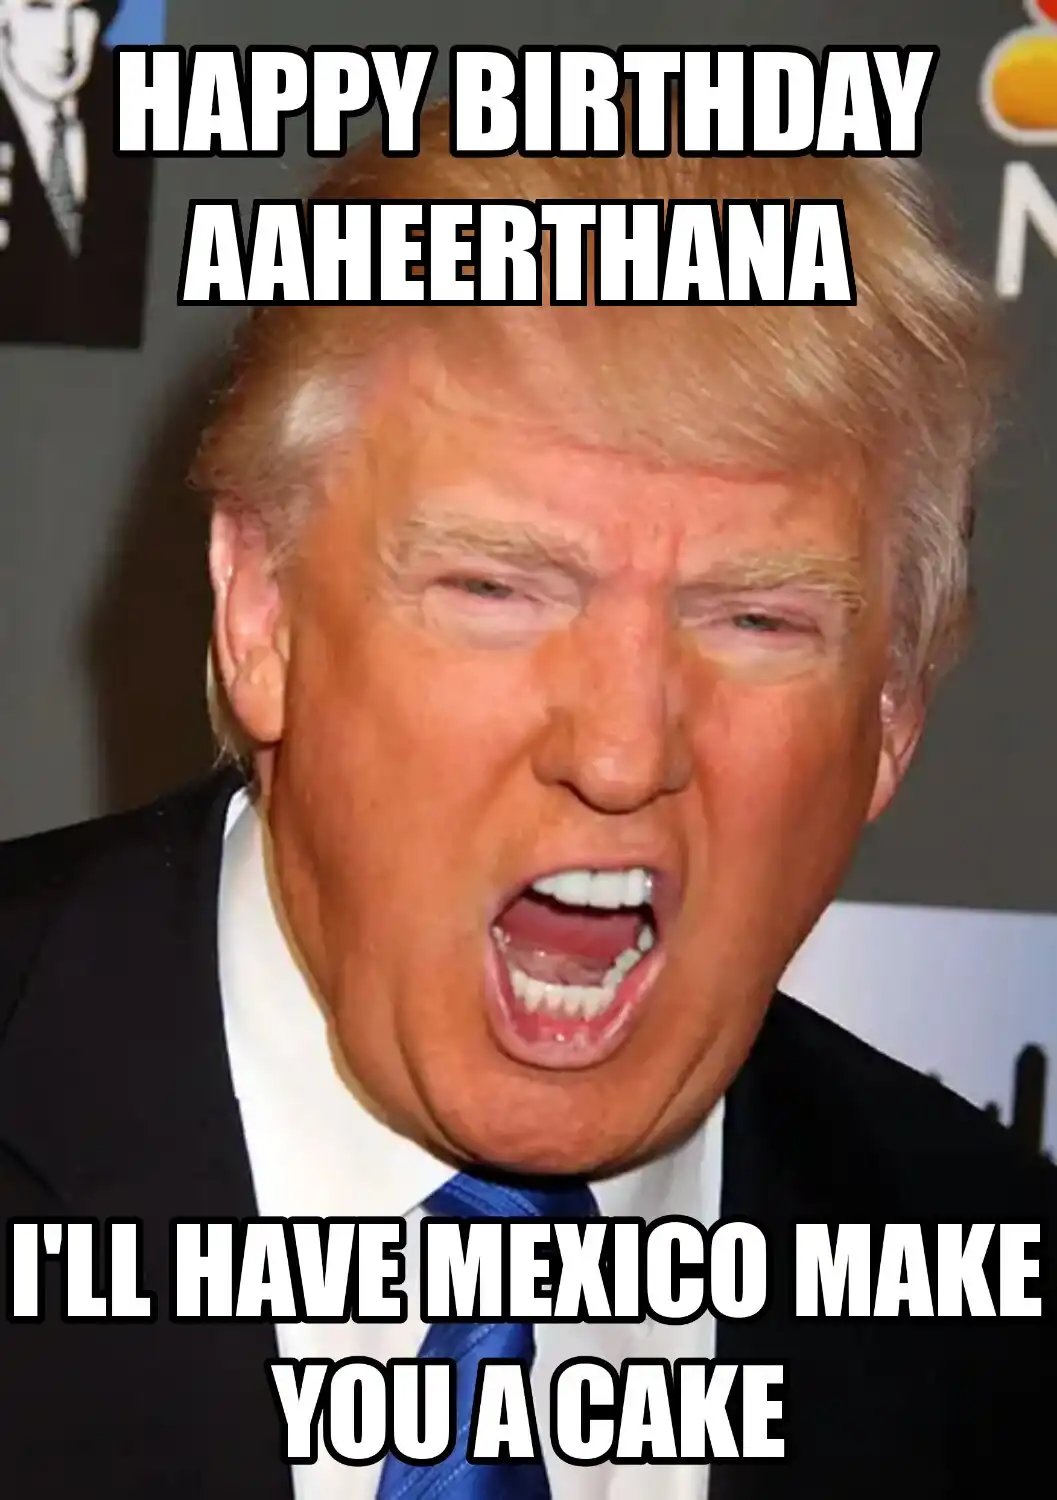 Happy Birthday Aaheerthana Mexico Make You A Cake Meme